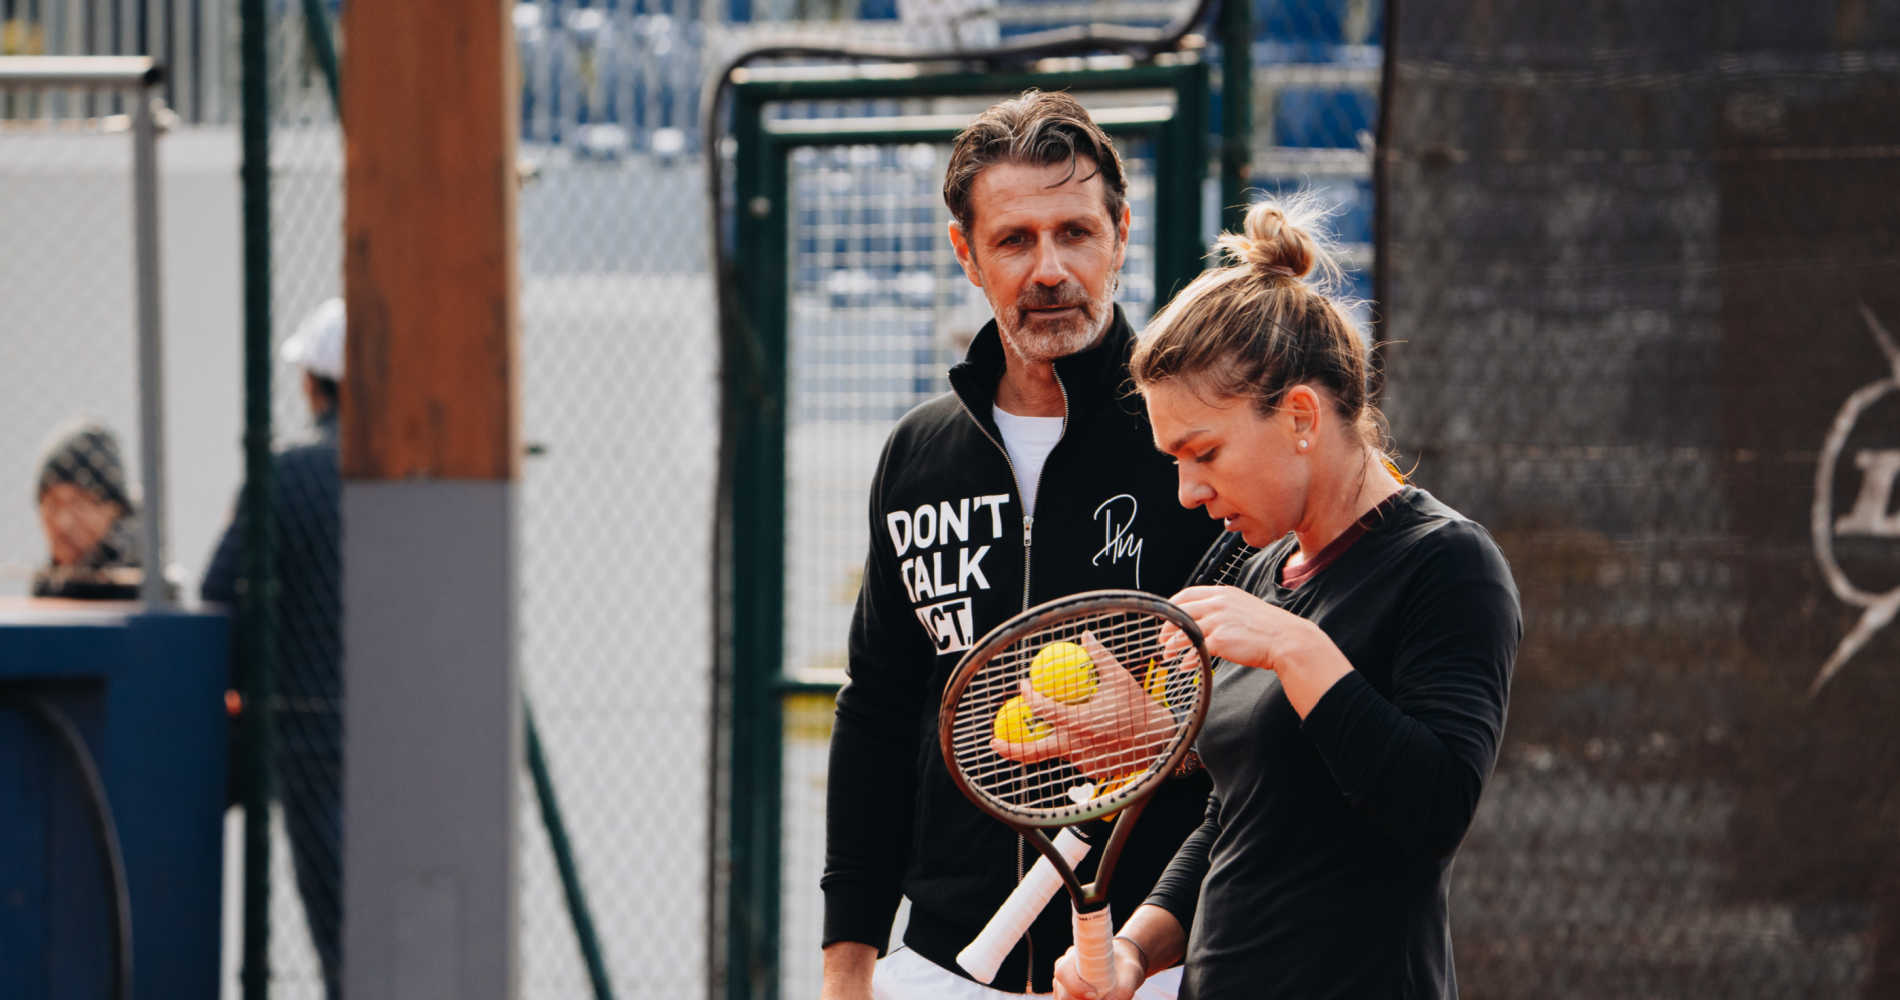 Patrick Mouratoglou et Simona Halep, Mouratoglou Tennis Academy, avril 2022